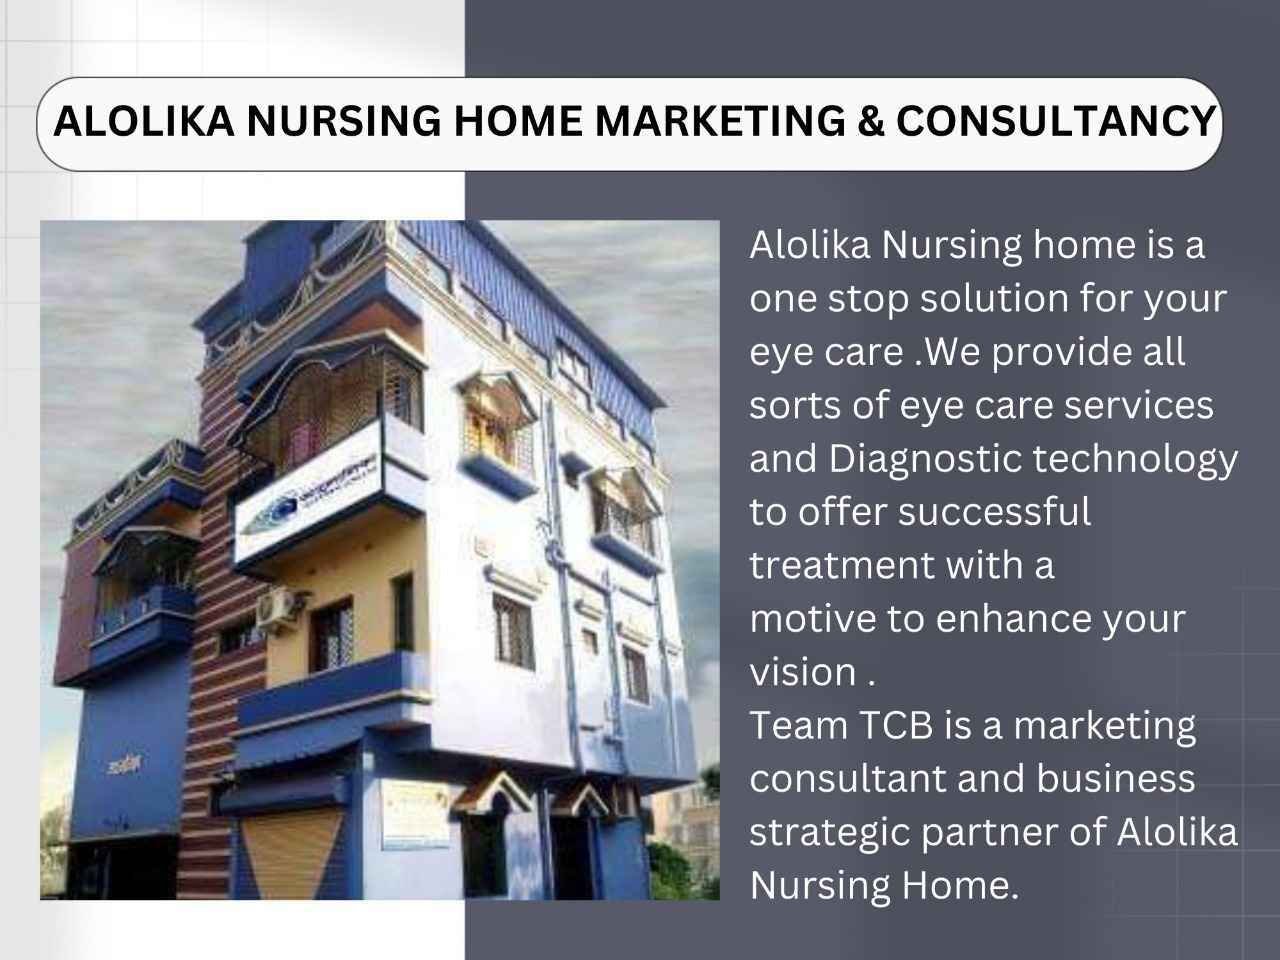 Alolika Nursing Home Marketing & Consultancy -Team TCB